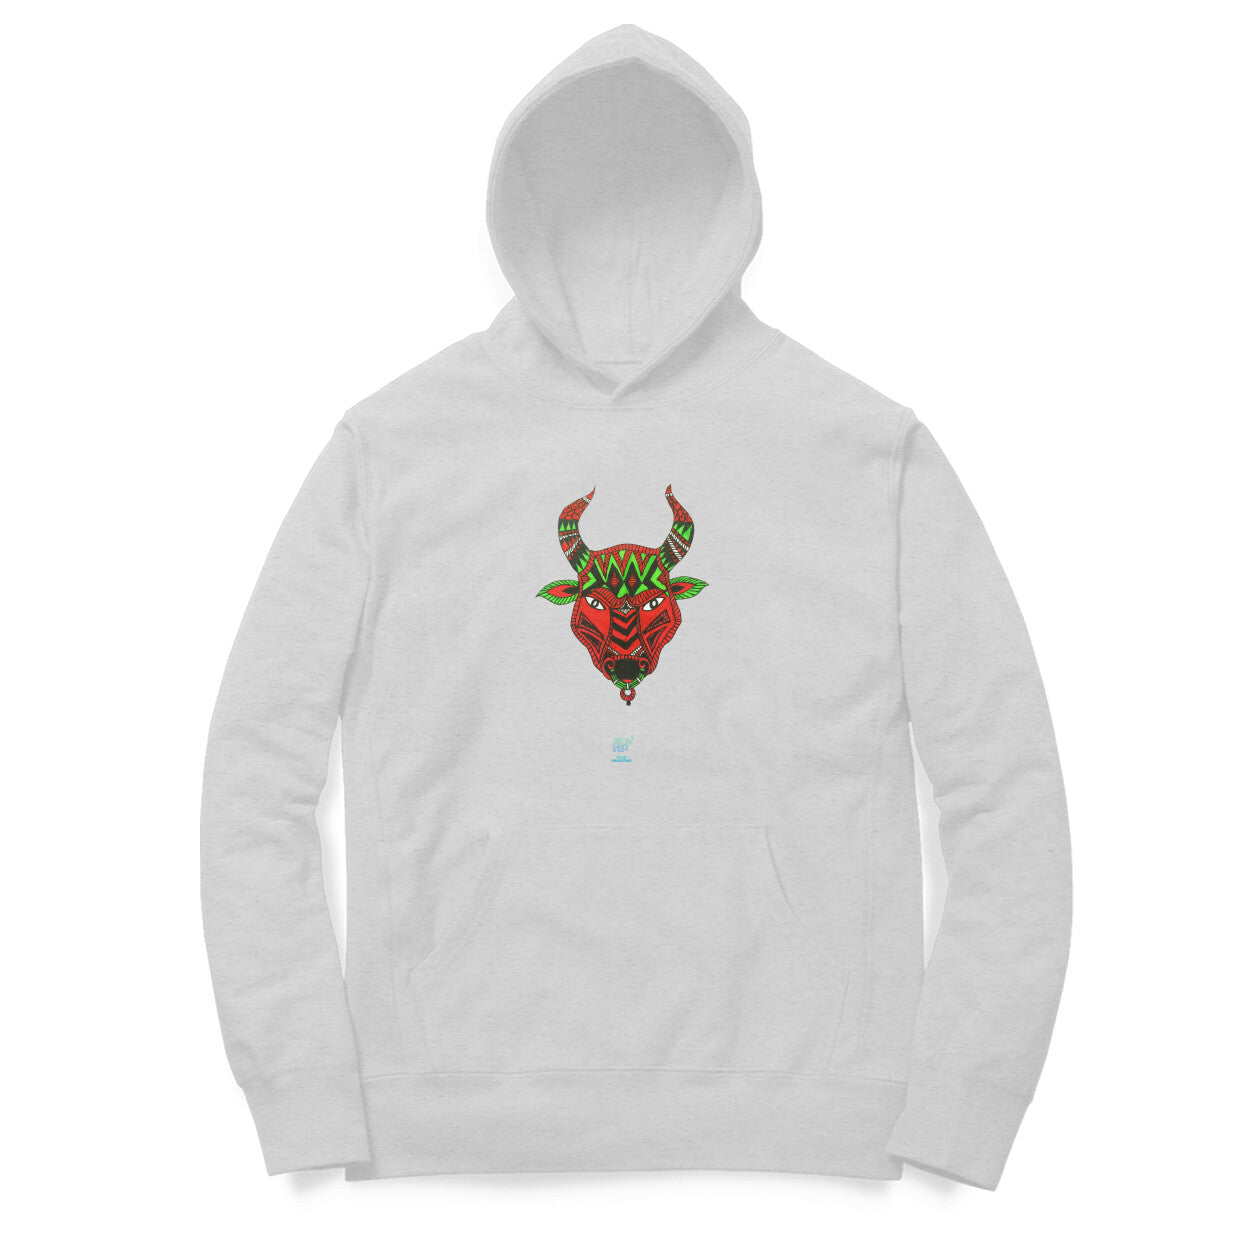 Bull - Unisex Hooded Sweatshirt